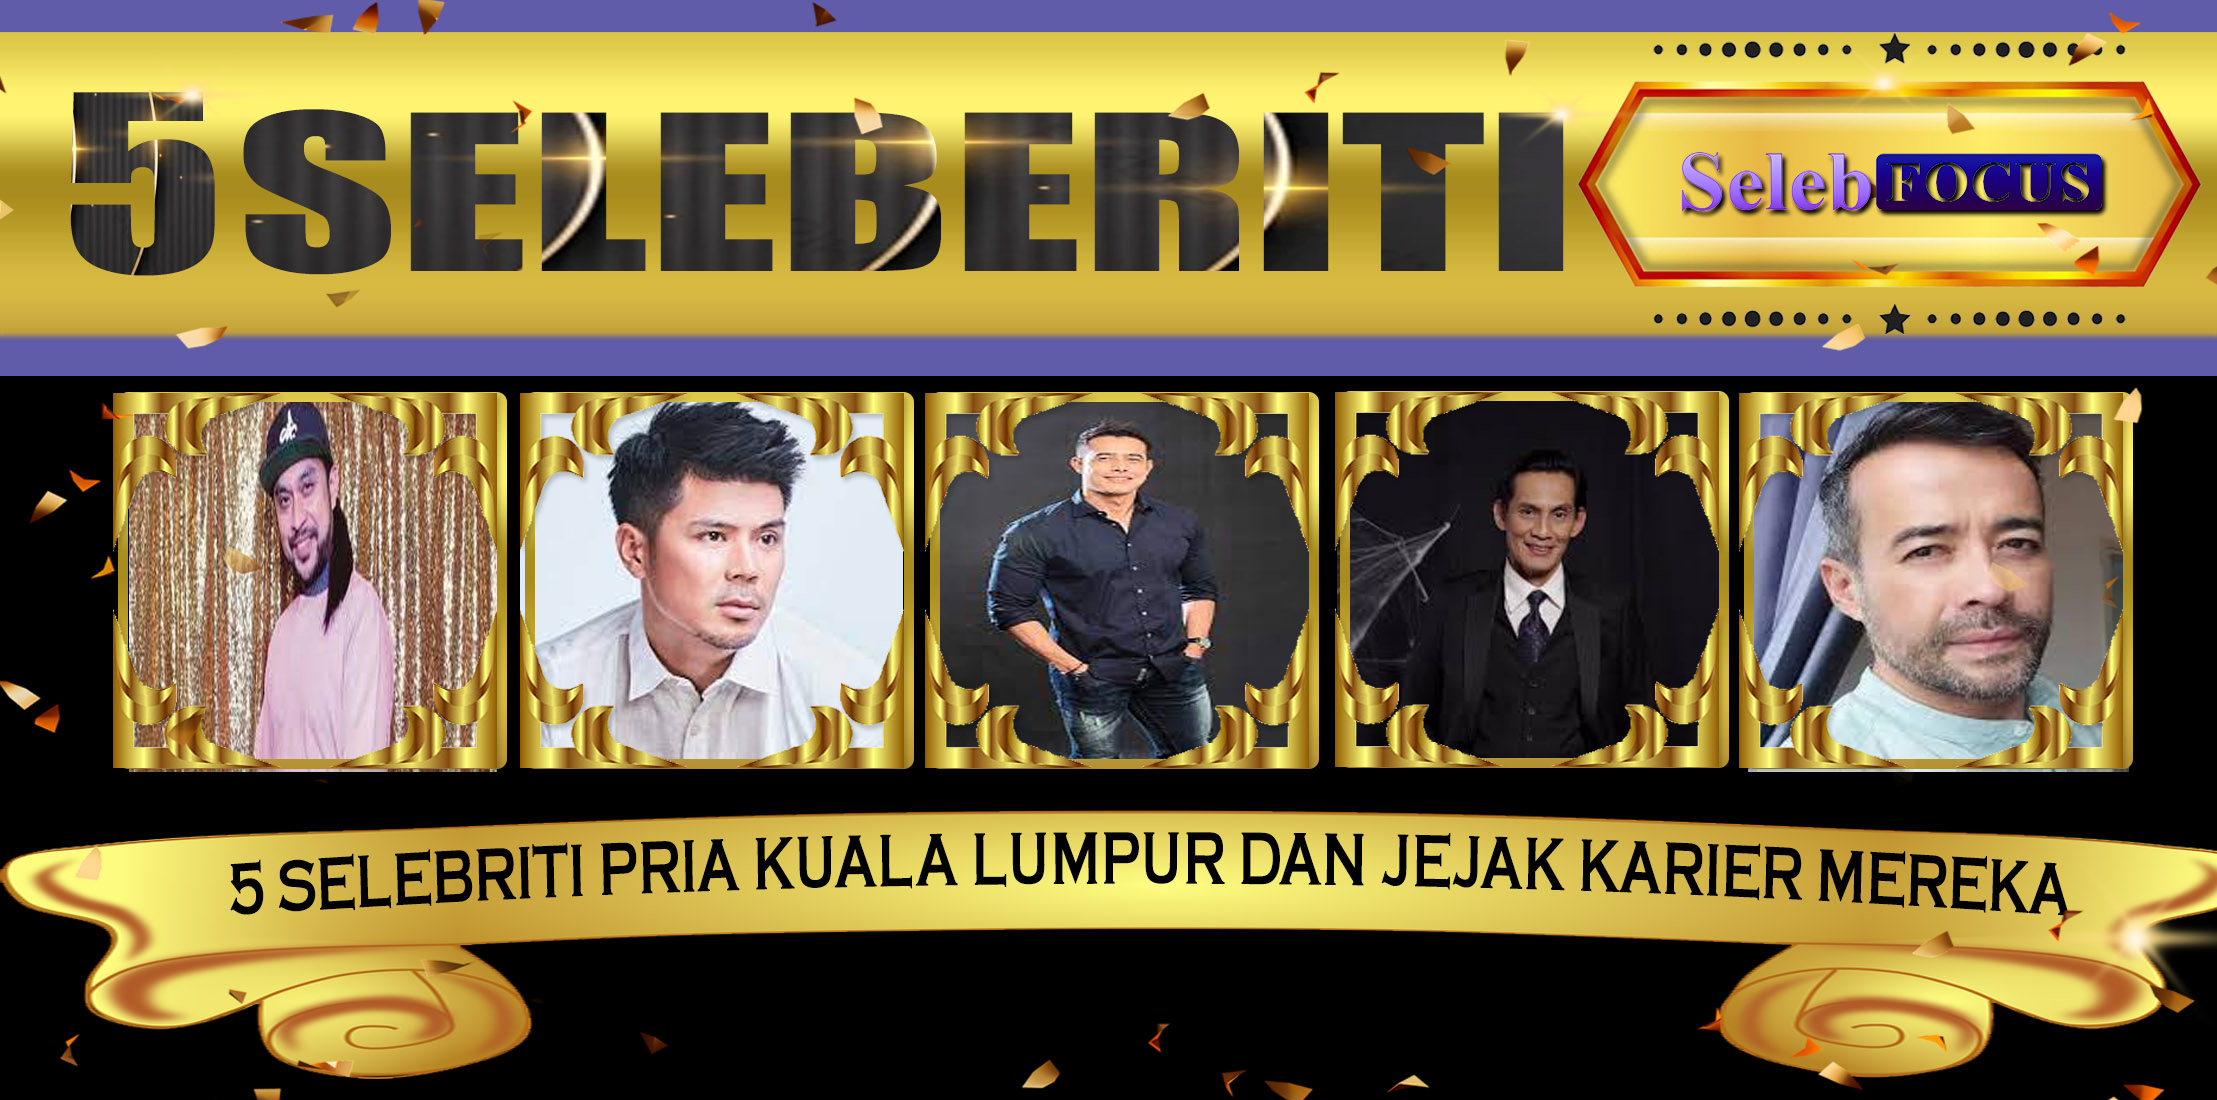 5 Selebriti Pria KualaLumpur dan Jejak Karier Mereka